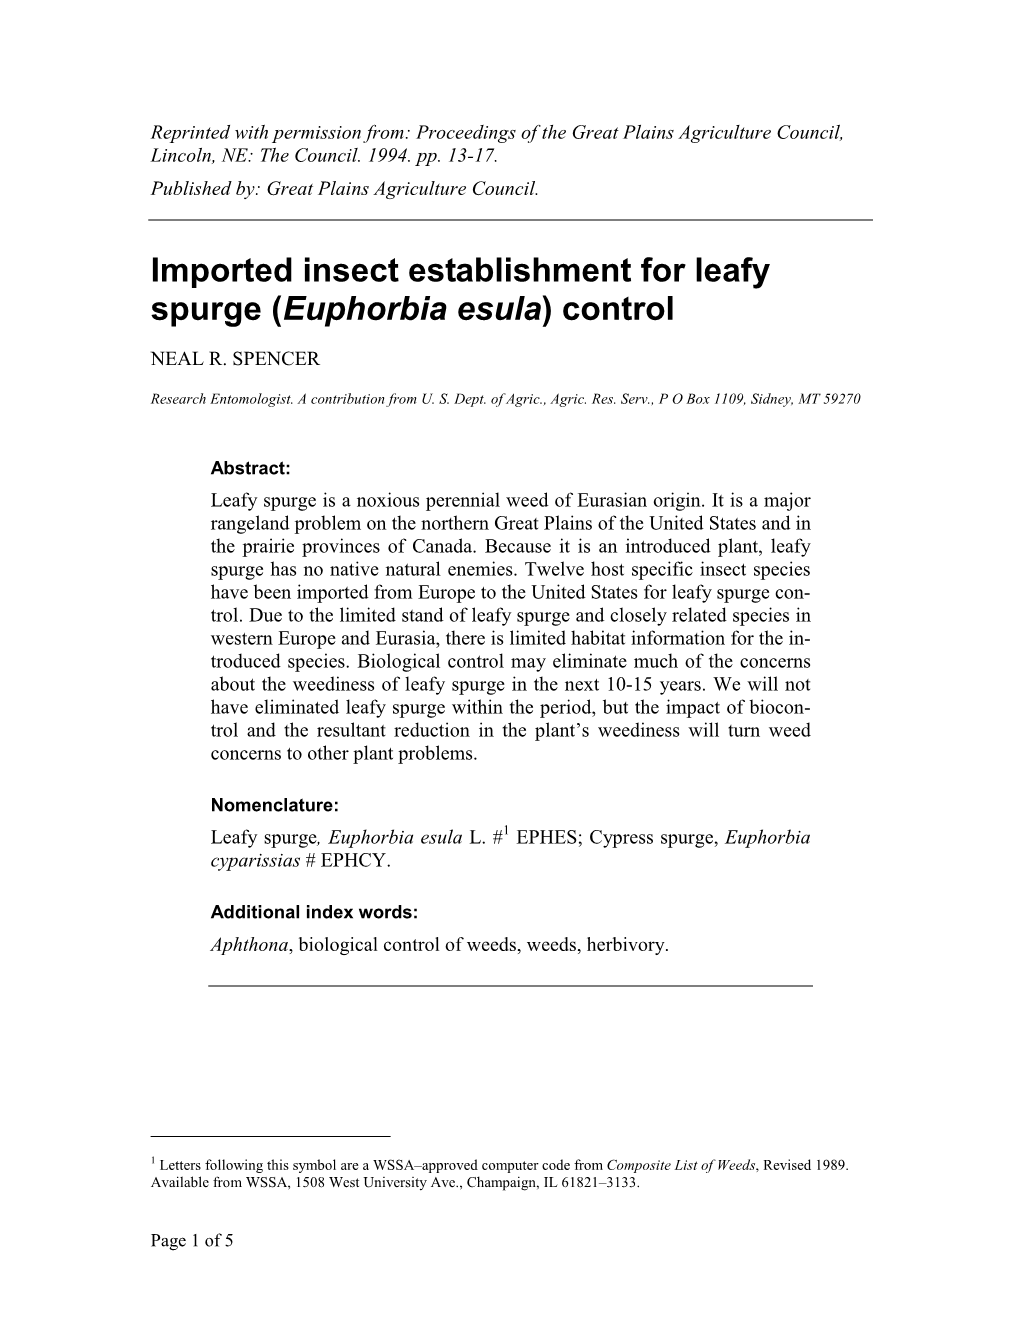 Imported Insect Establishment for Leafy Spurge (Euphorbia Esula) Control